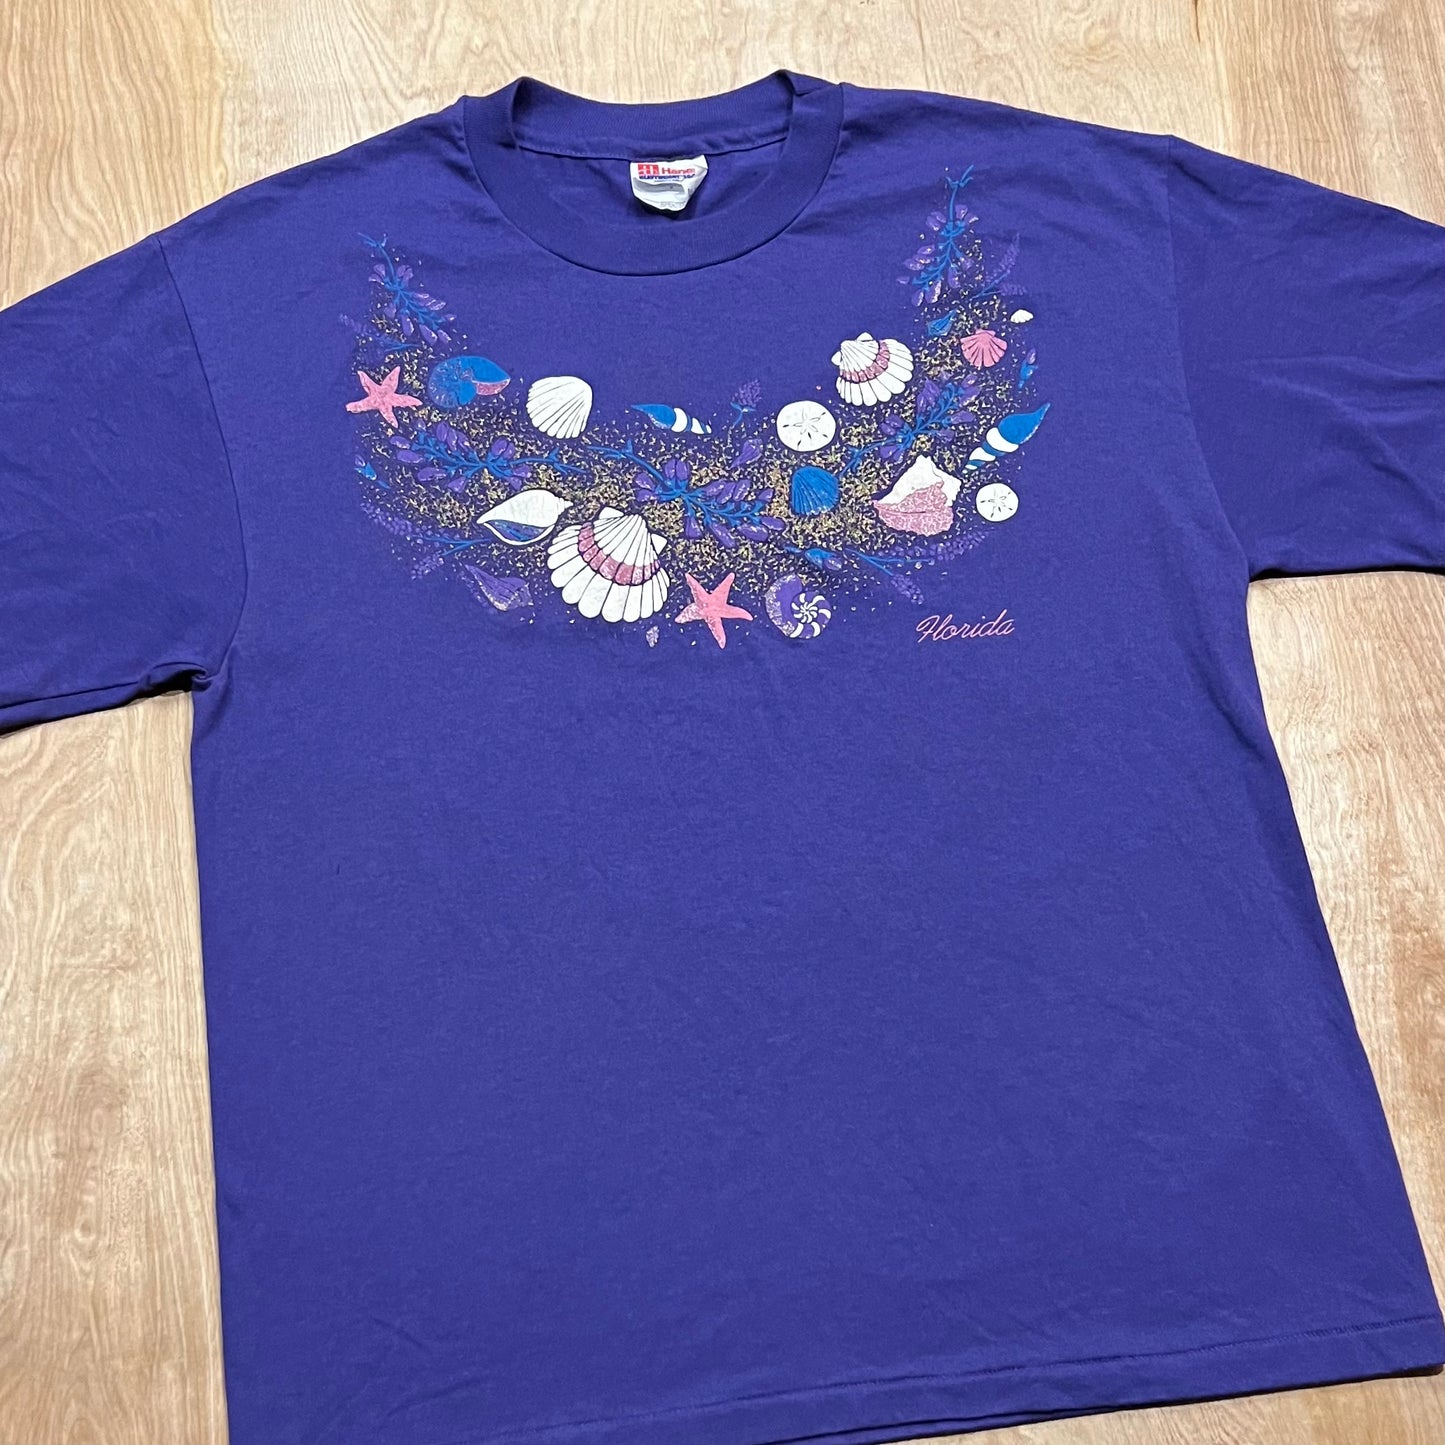 Vintage 90's Florida Single Stitch T-Shirt